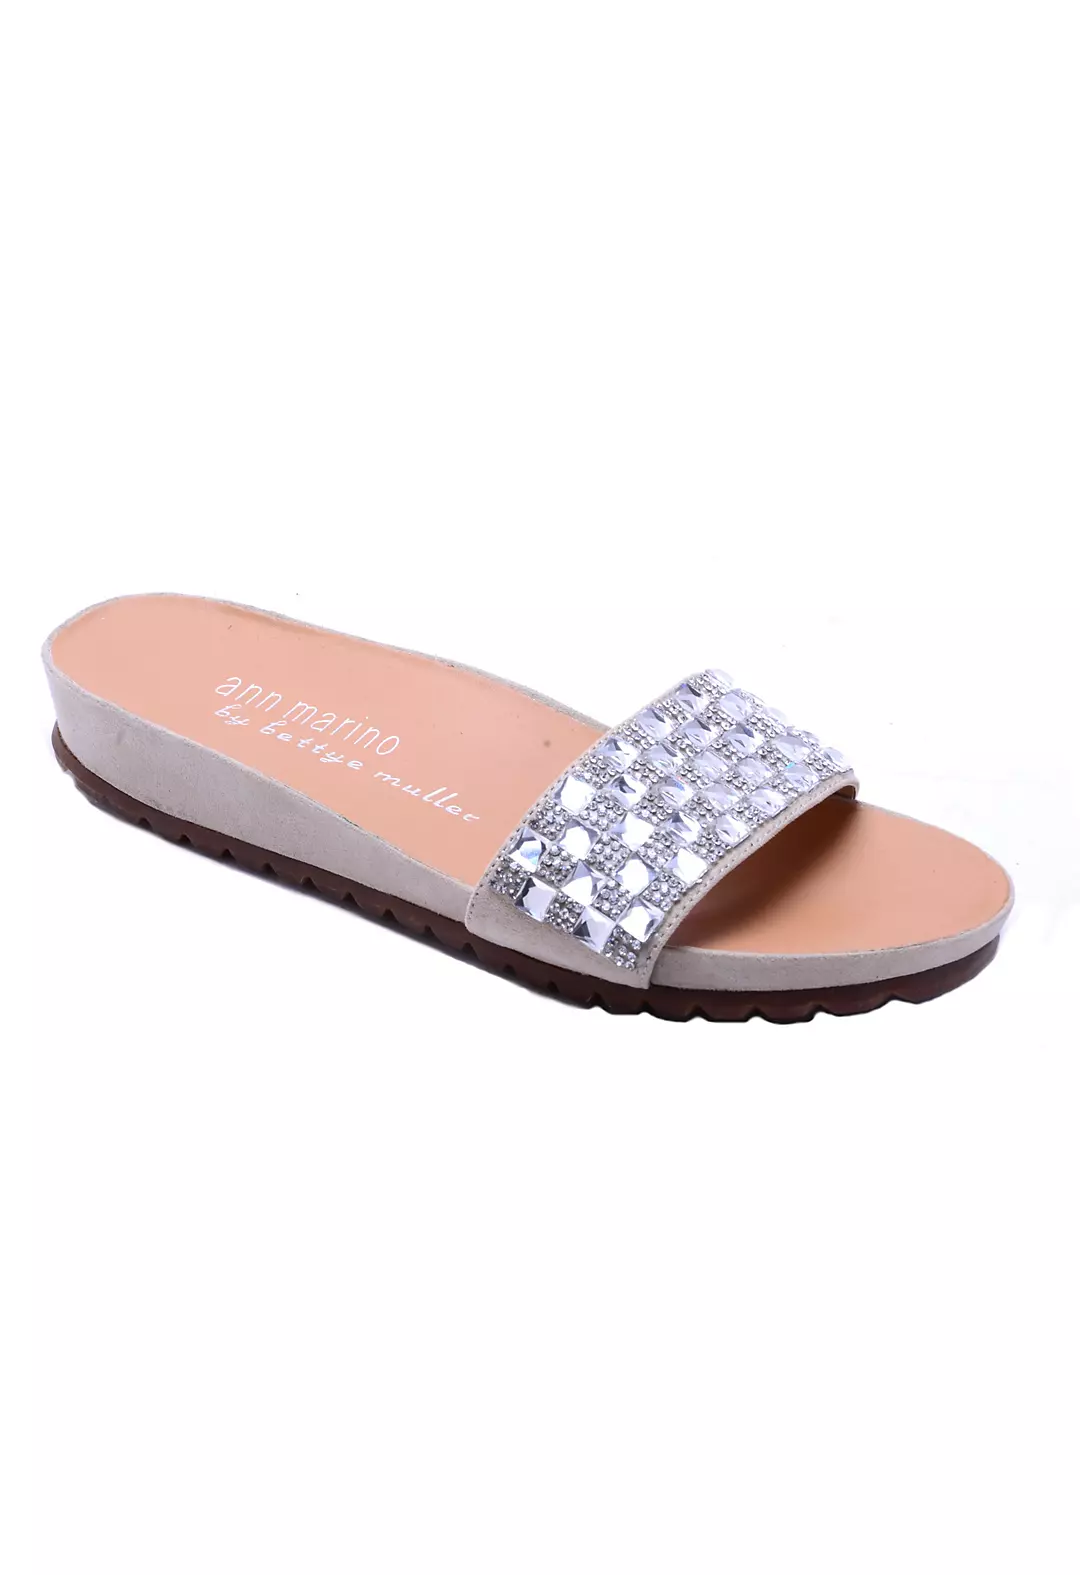 Ann Marino by Bettye Muller Galaxy Slide Sandals Image